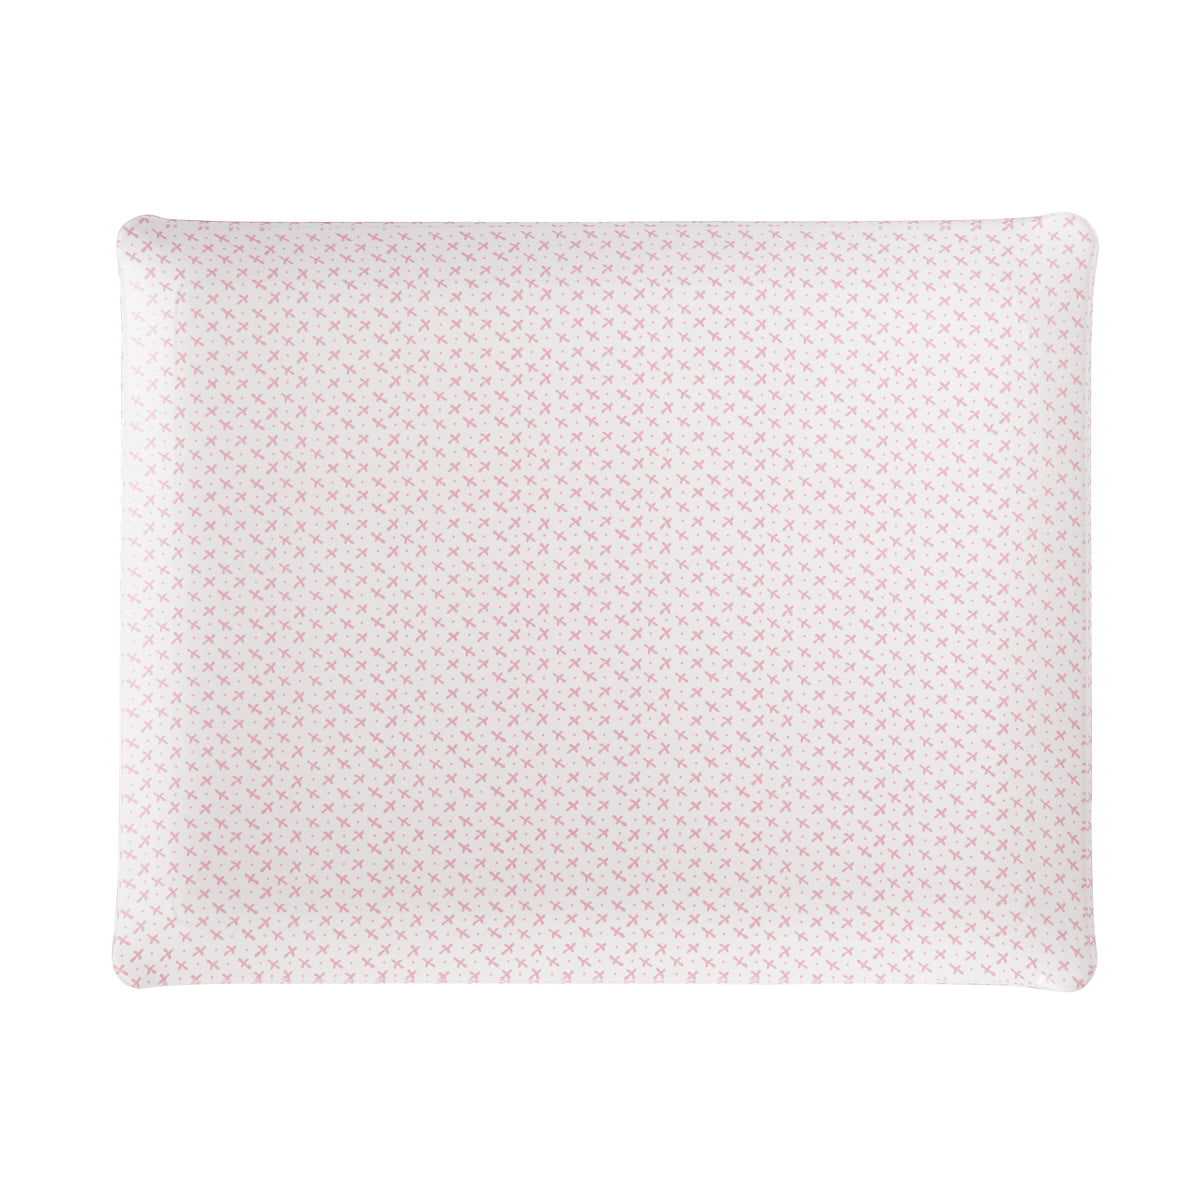 Nina Campbell Fabric Tray Large - Sprig Pink